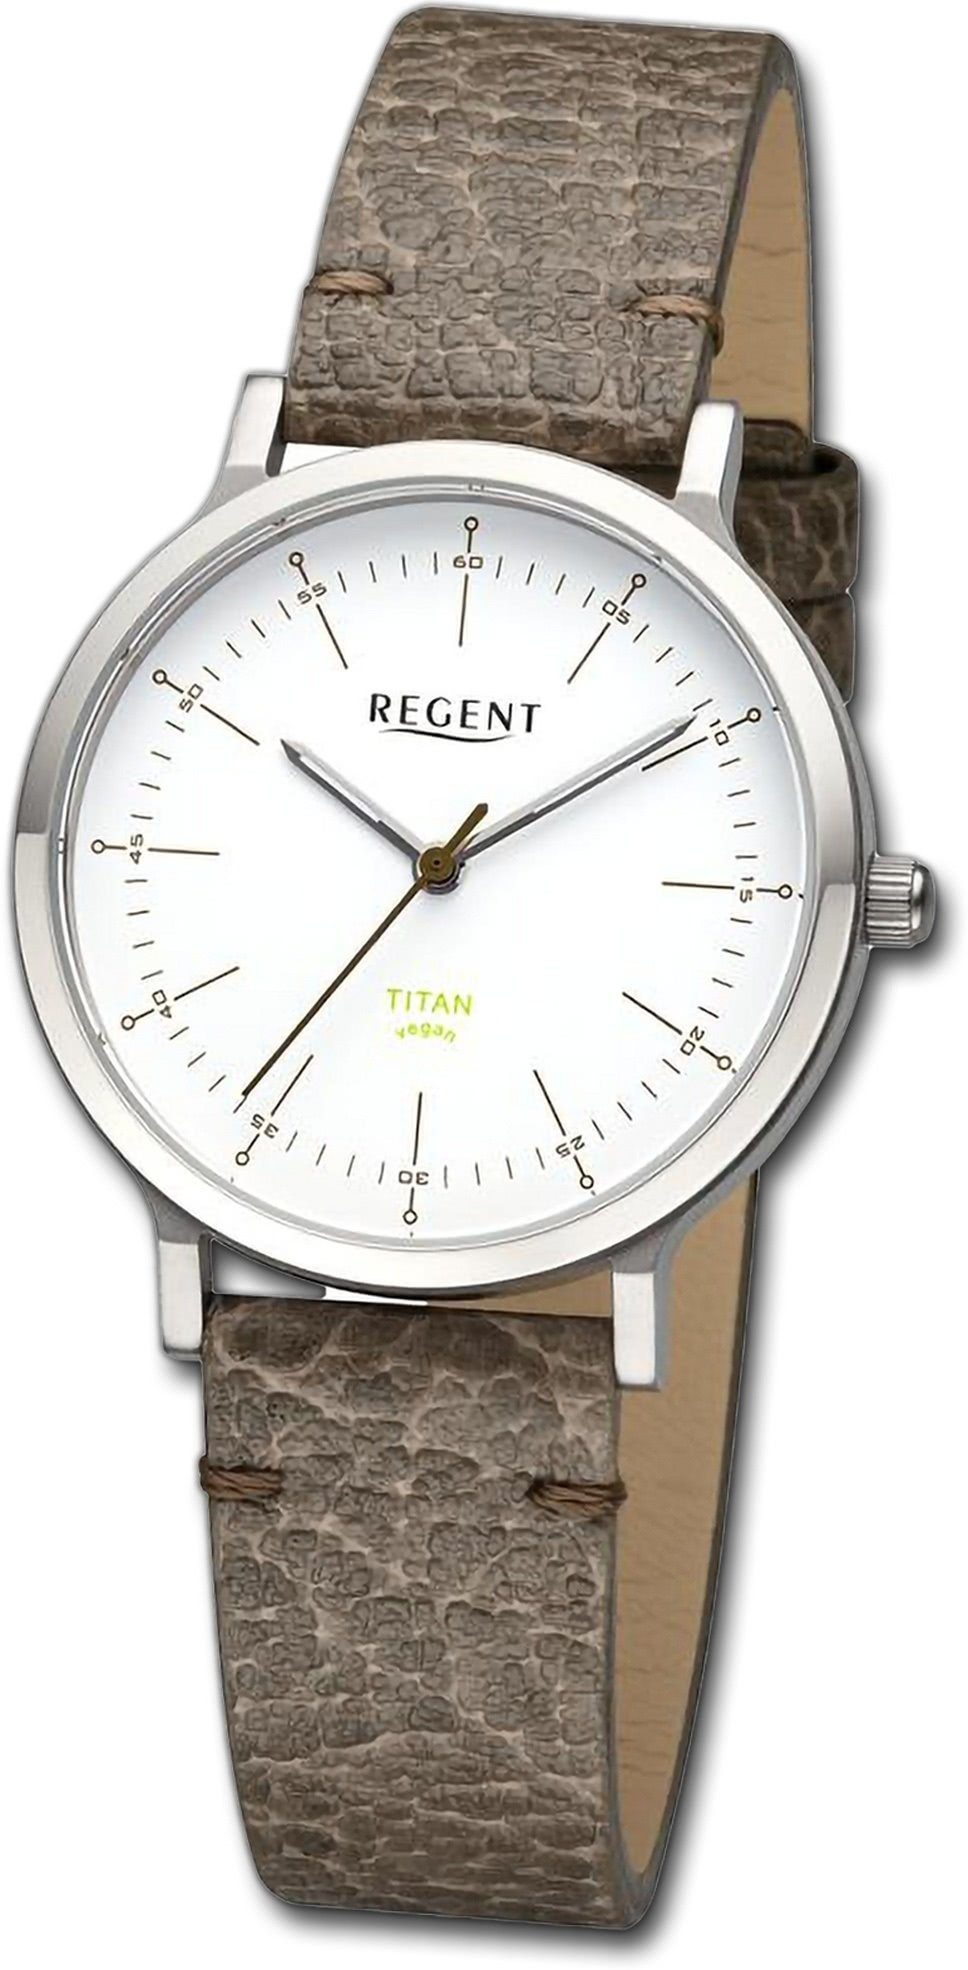 Analog, groß Armbanduhr Regent extra rundes (ca. Quarzuhr 33mm) Gehäuse, Damenuhr Lederarmband Regent braun, Damen